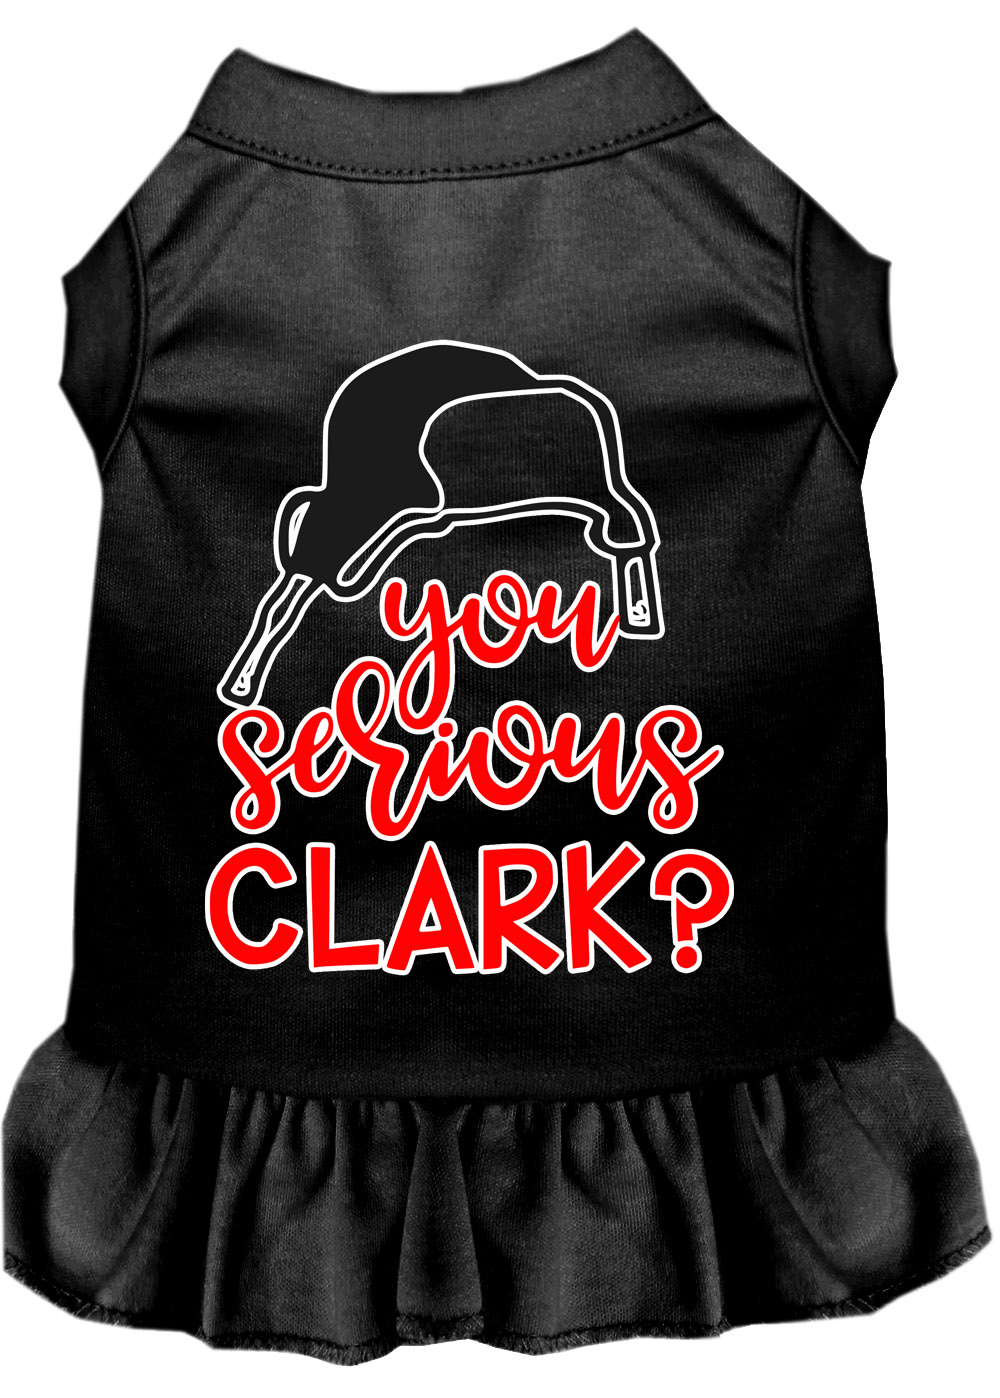 You Serious Clark? Screen Print Dog Dress Black Lg